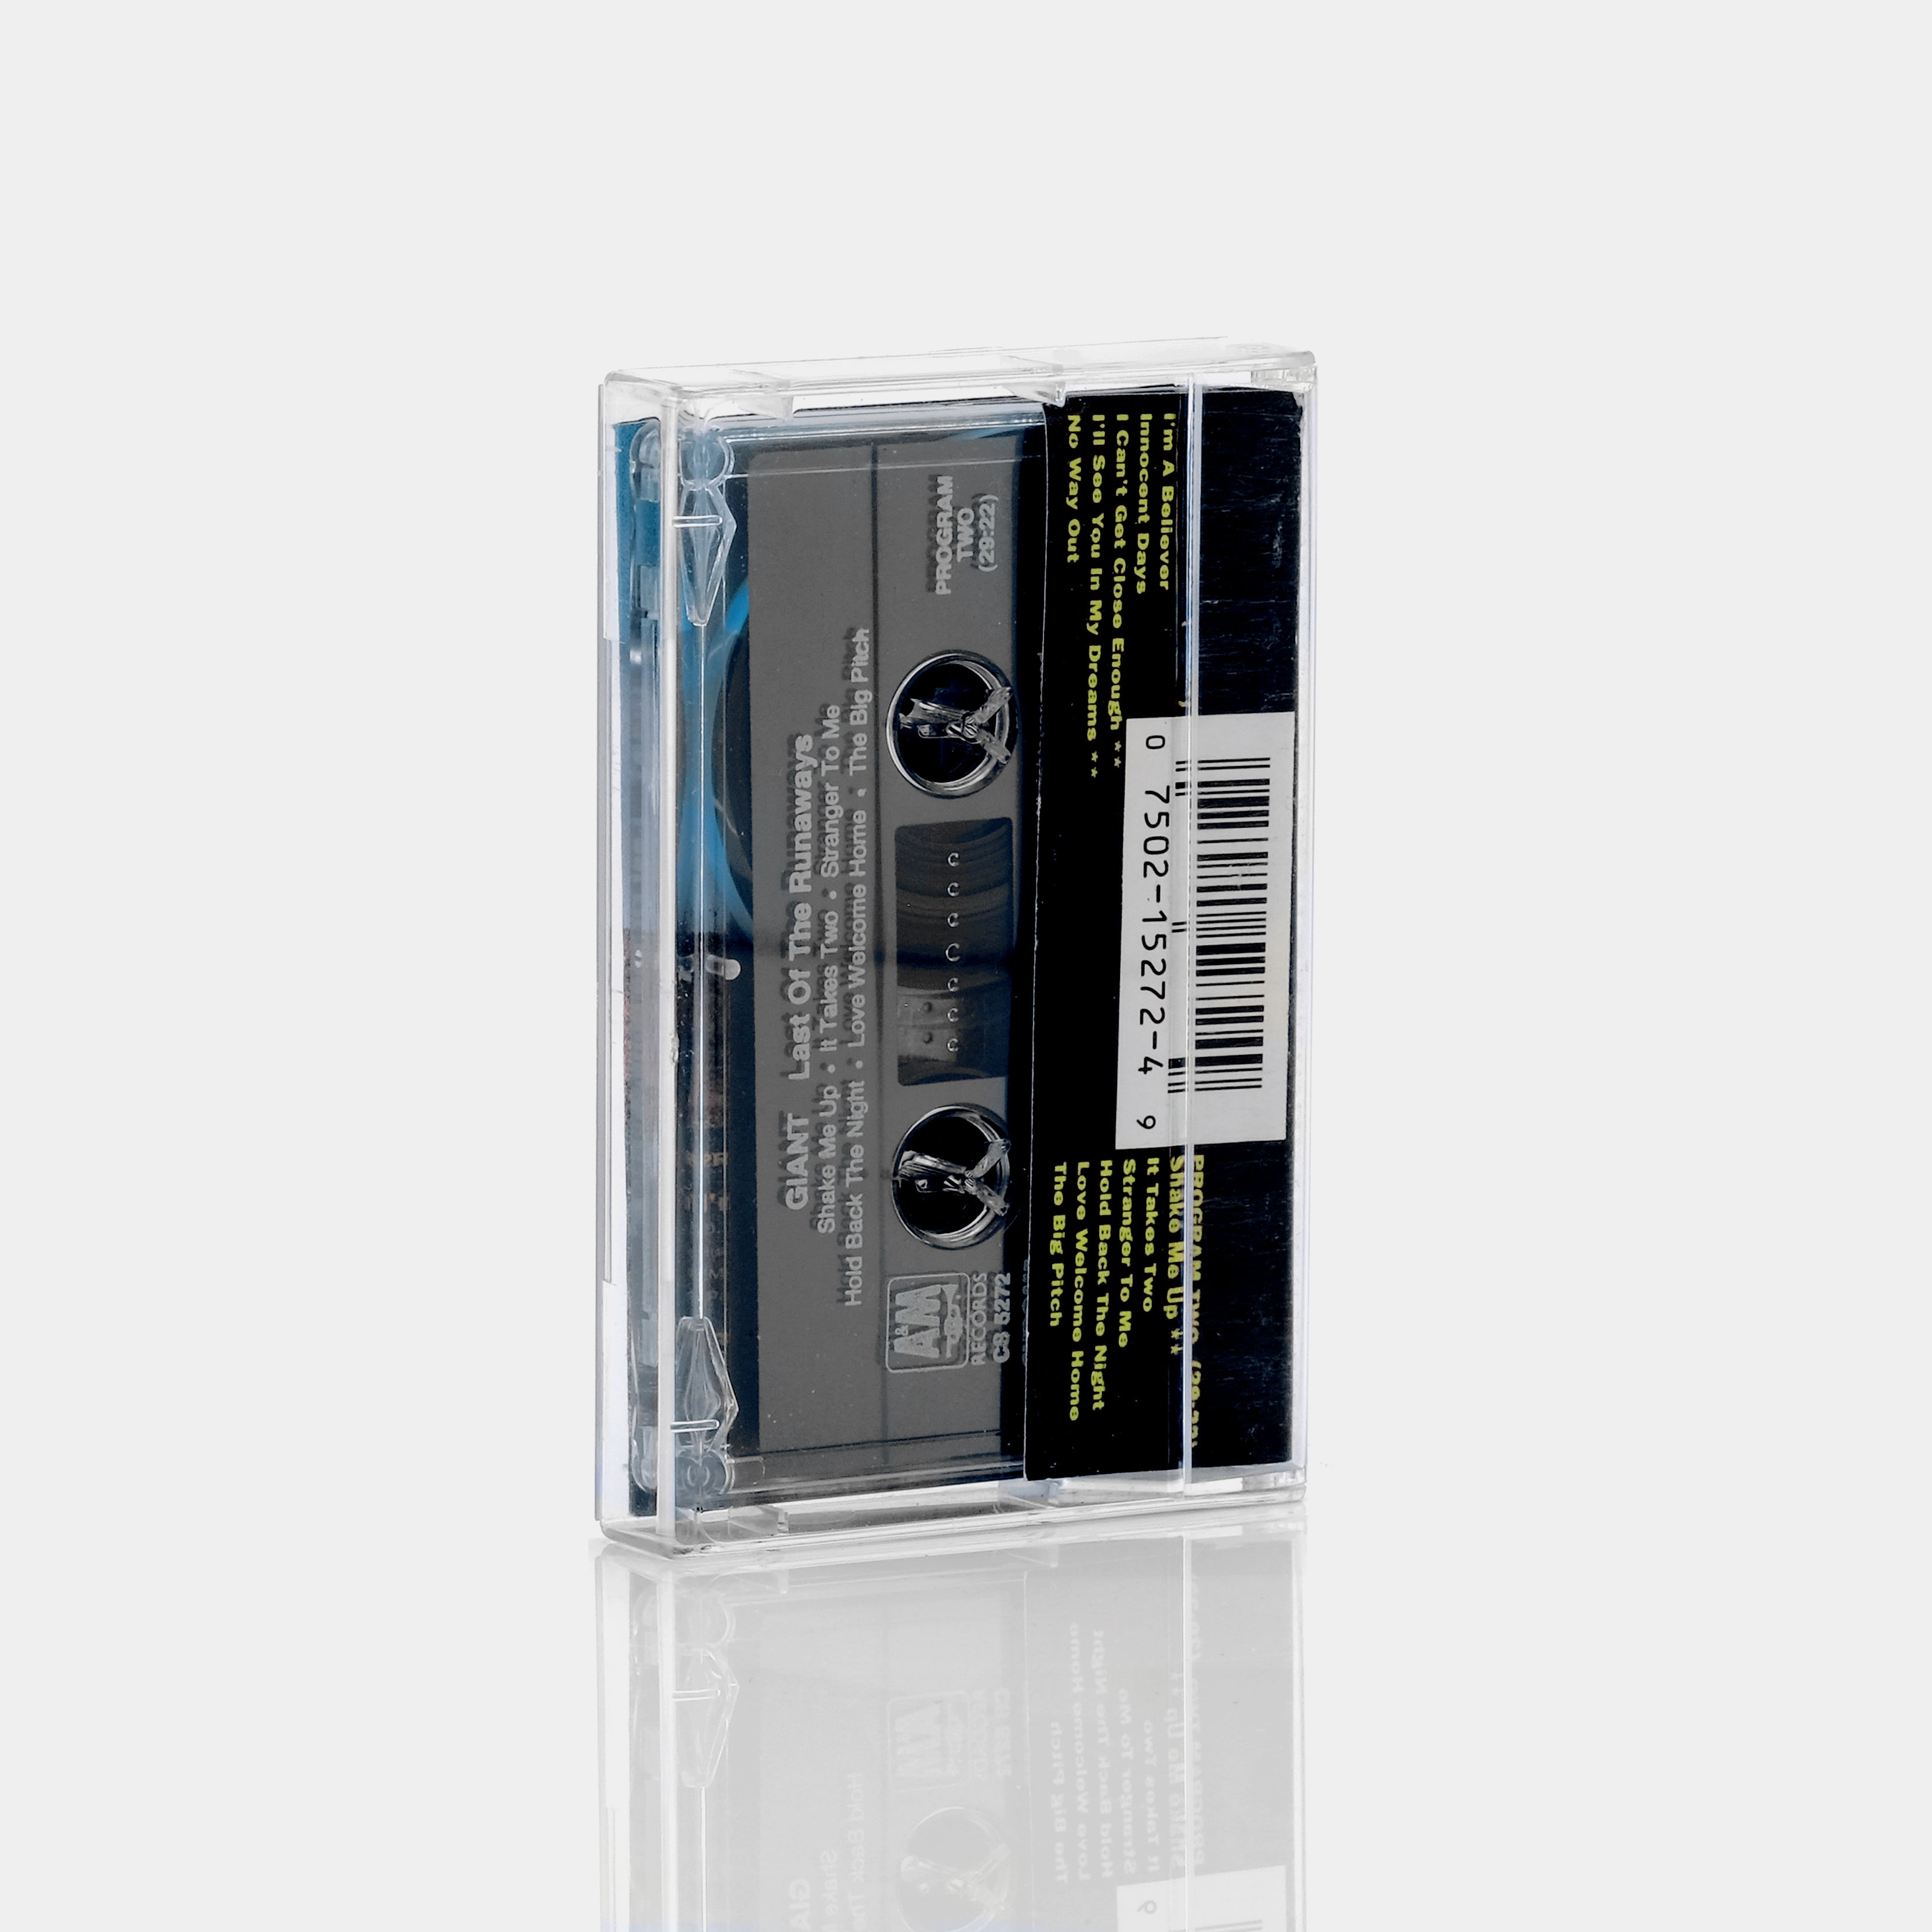 Giant - Last Of The Runaways Cassette Tape